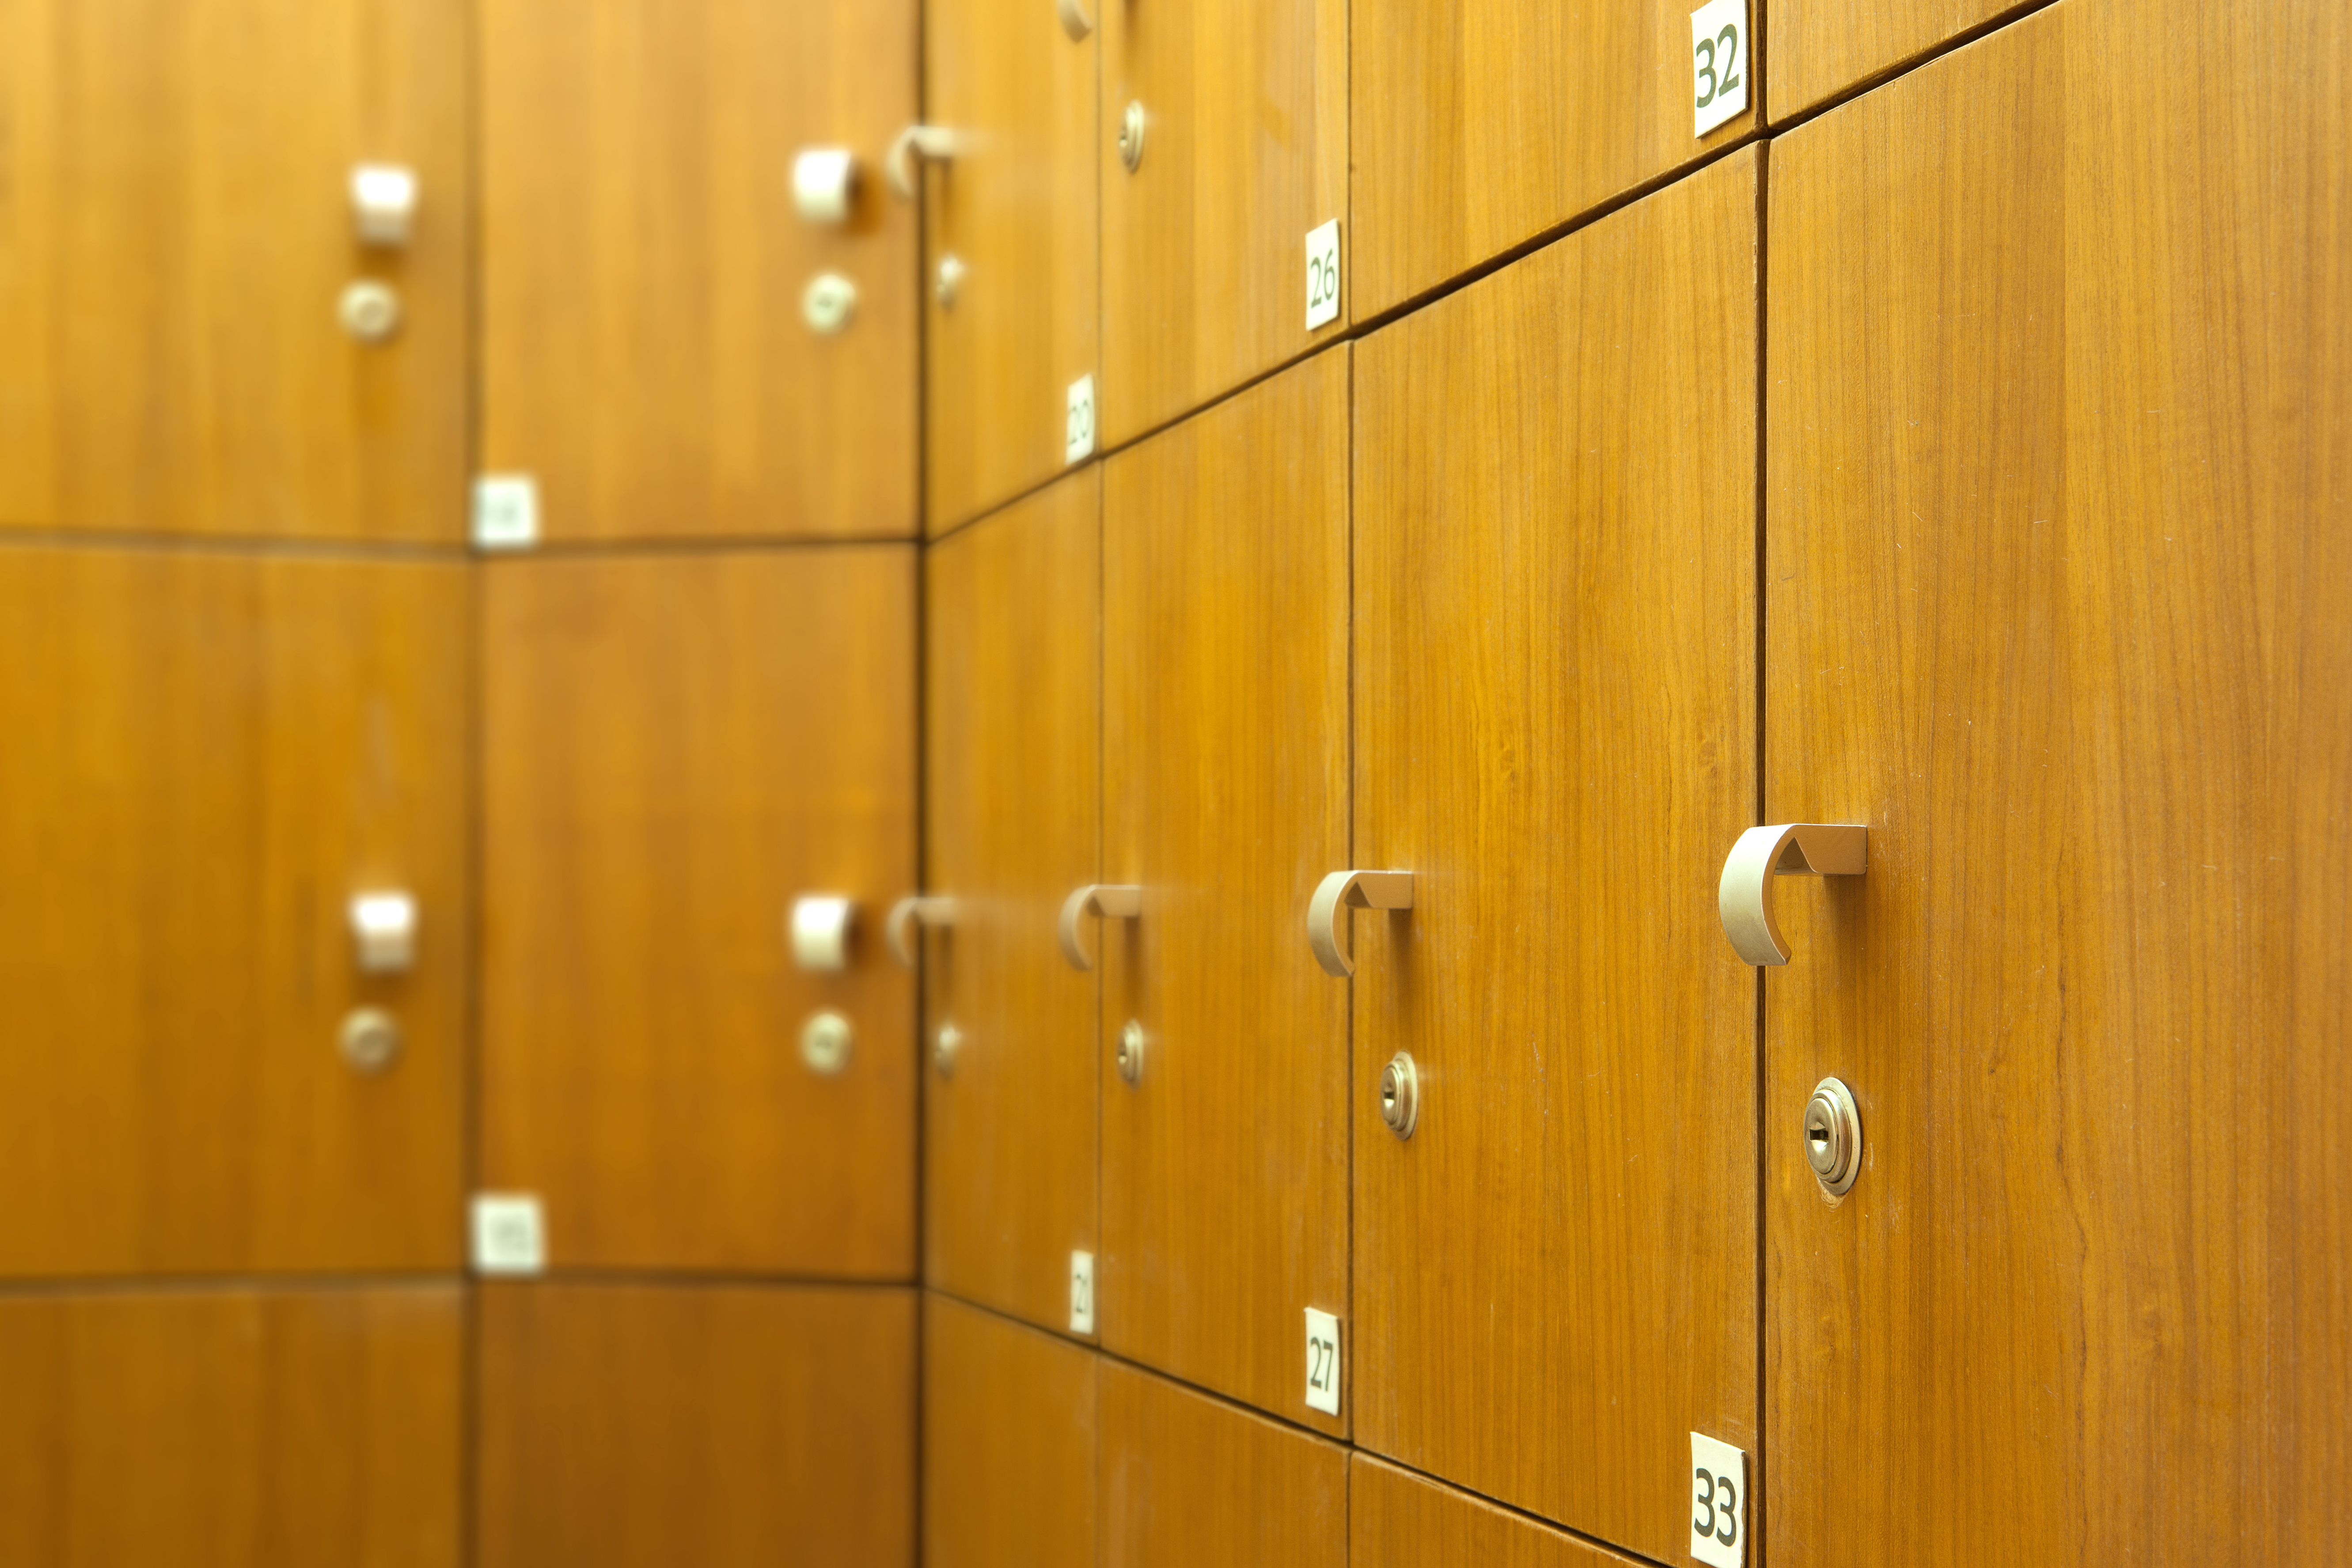 Lockers in changing room | Source: Shutterstock